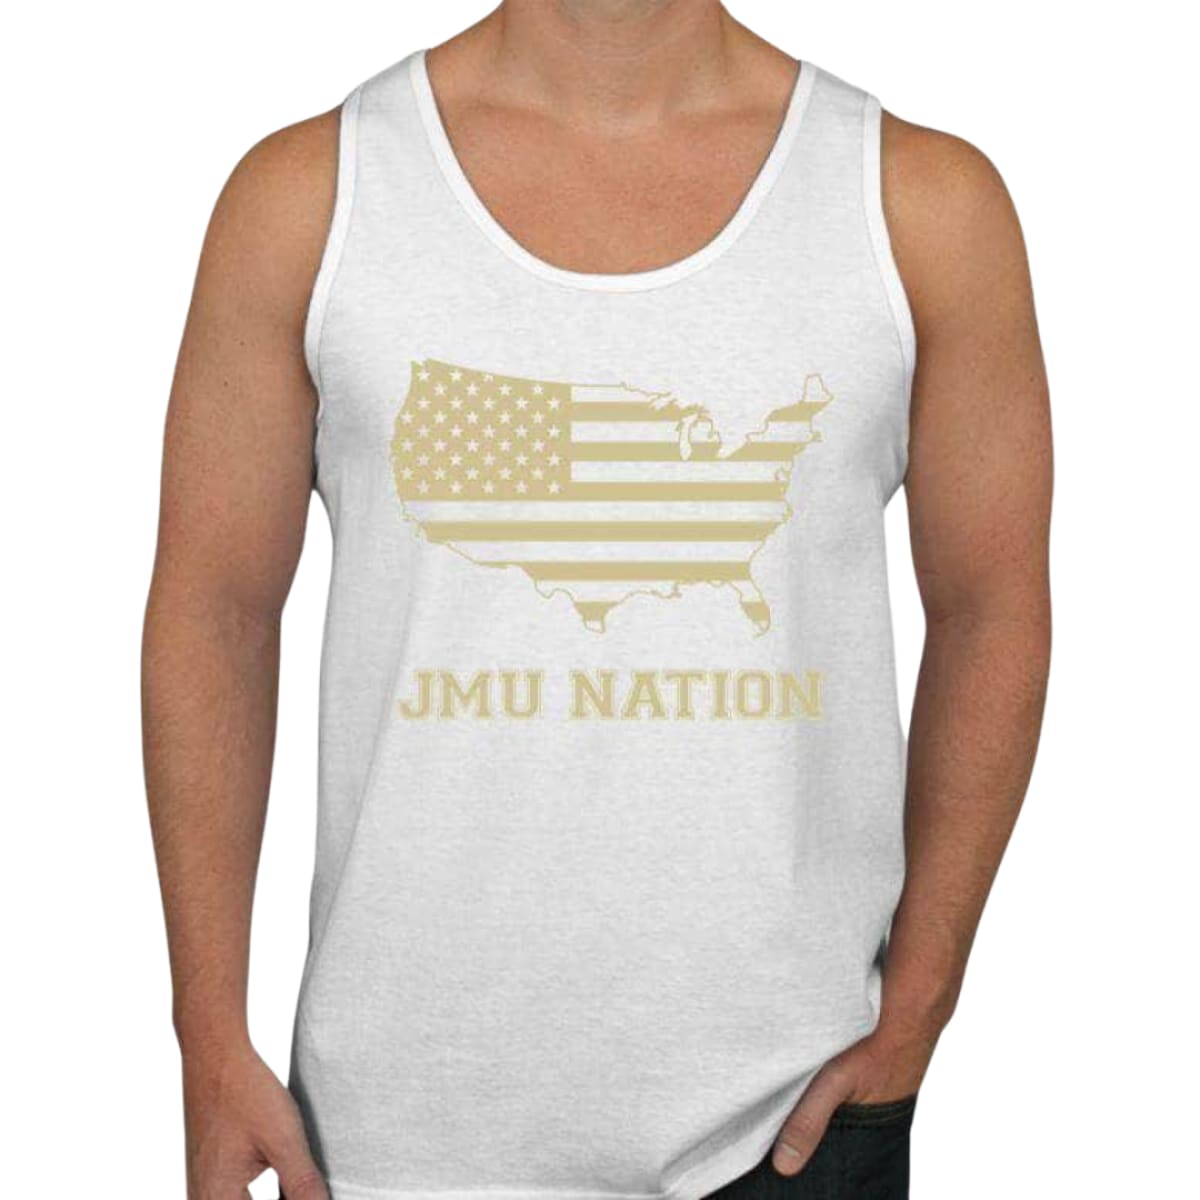 JMU Nation Men’s/Unisex Cotton Tank - S / WHITE W/GOLD